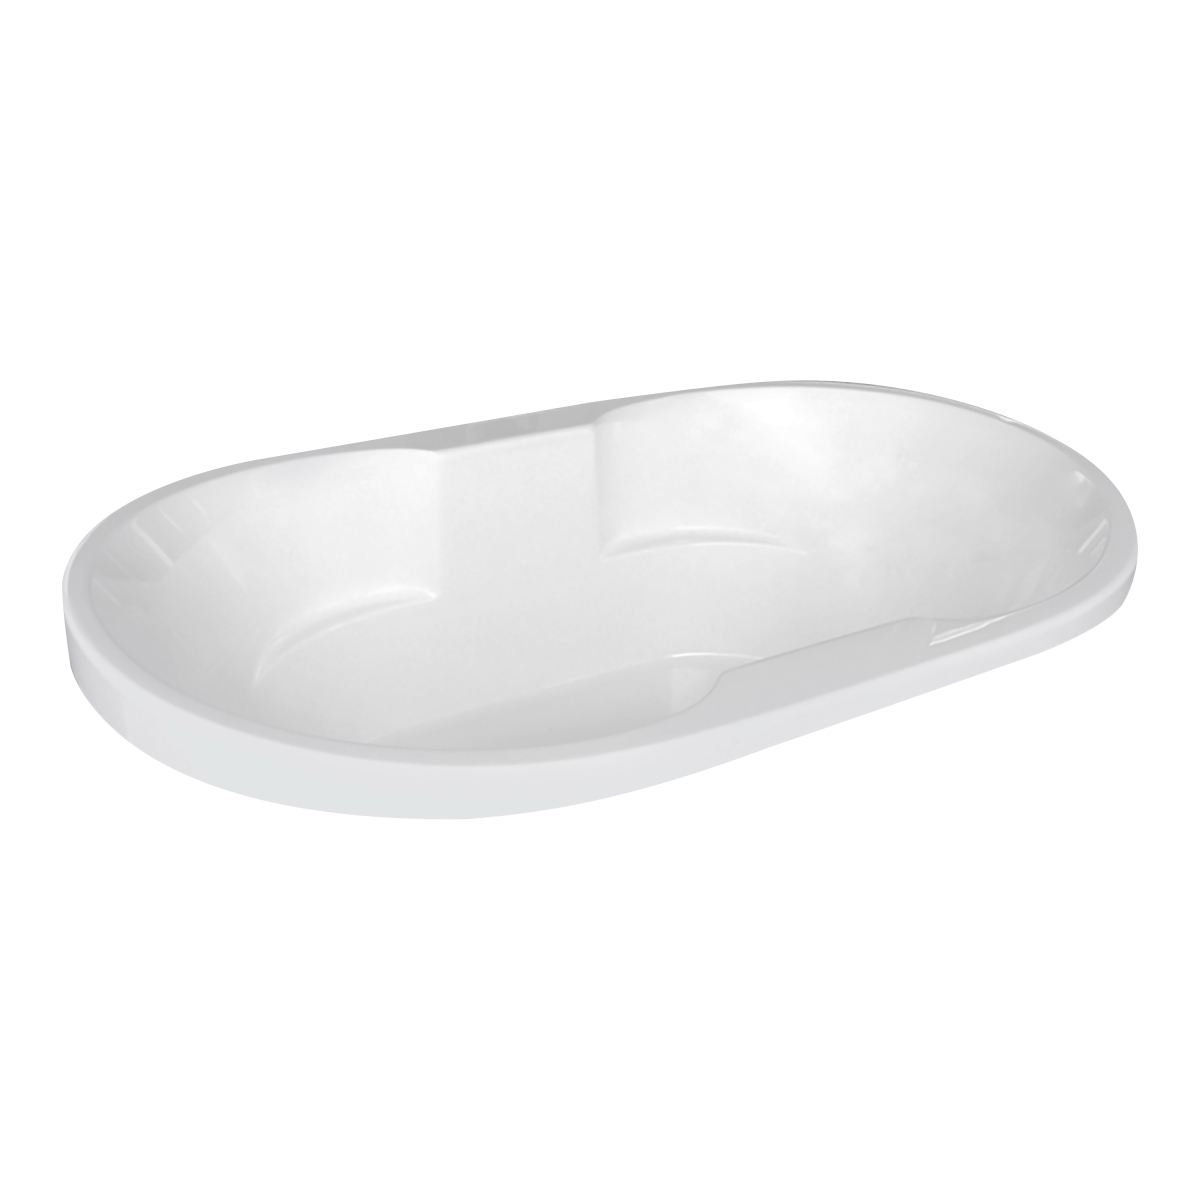 Neptune7040diwht 70 X 40 In. Contemporary Oval Acrylic Contoured Drop-in Bath Tub, White